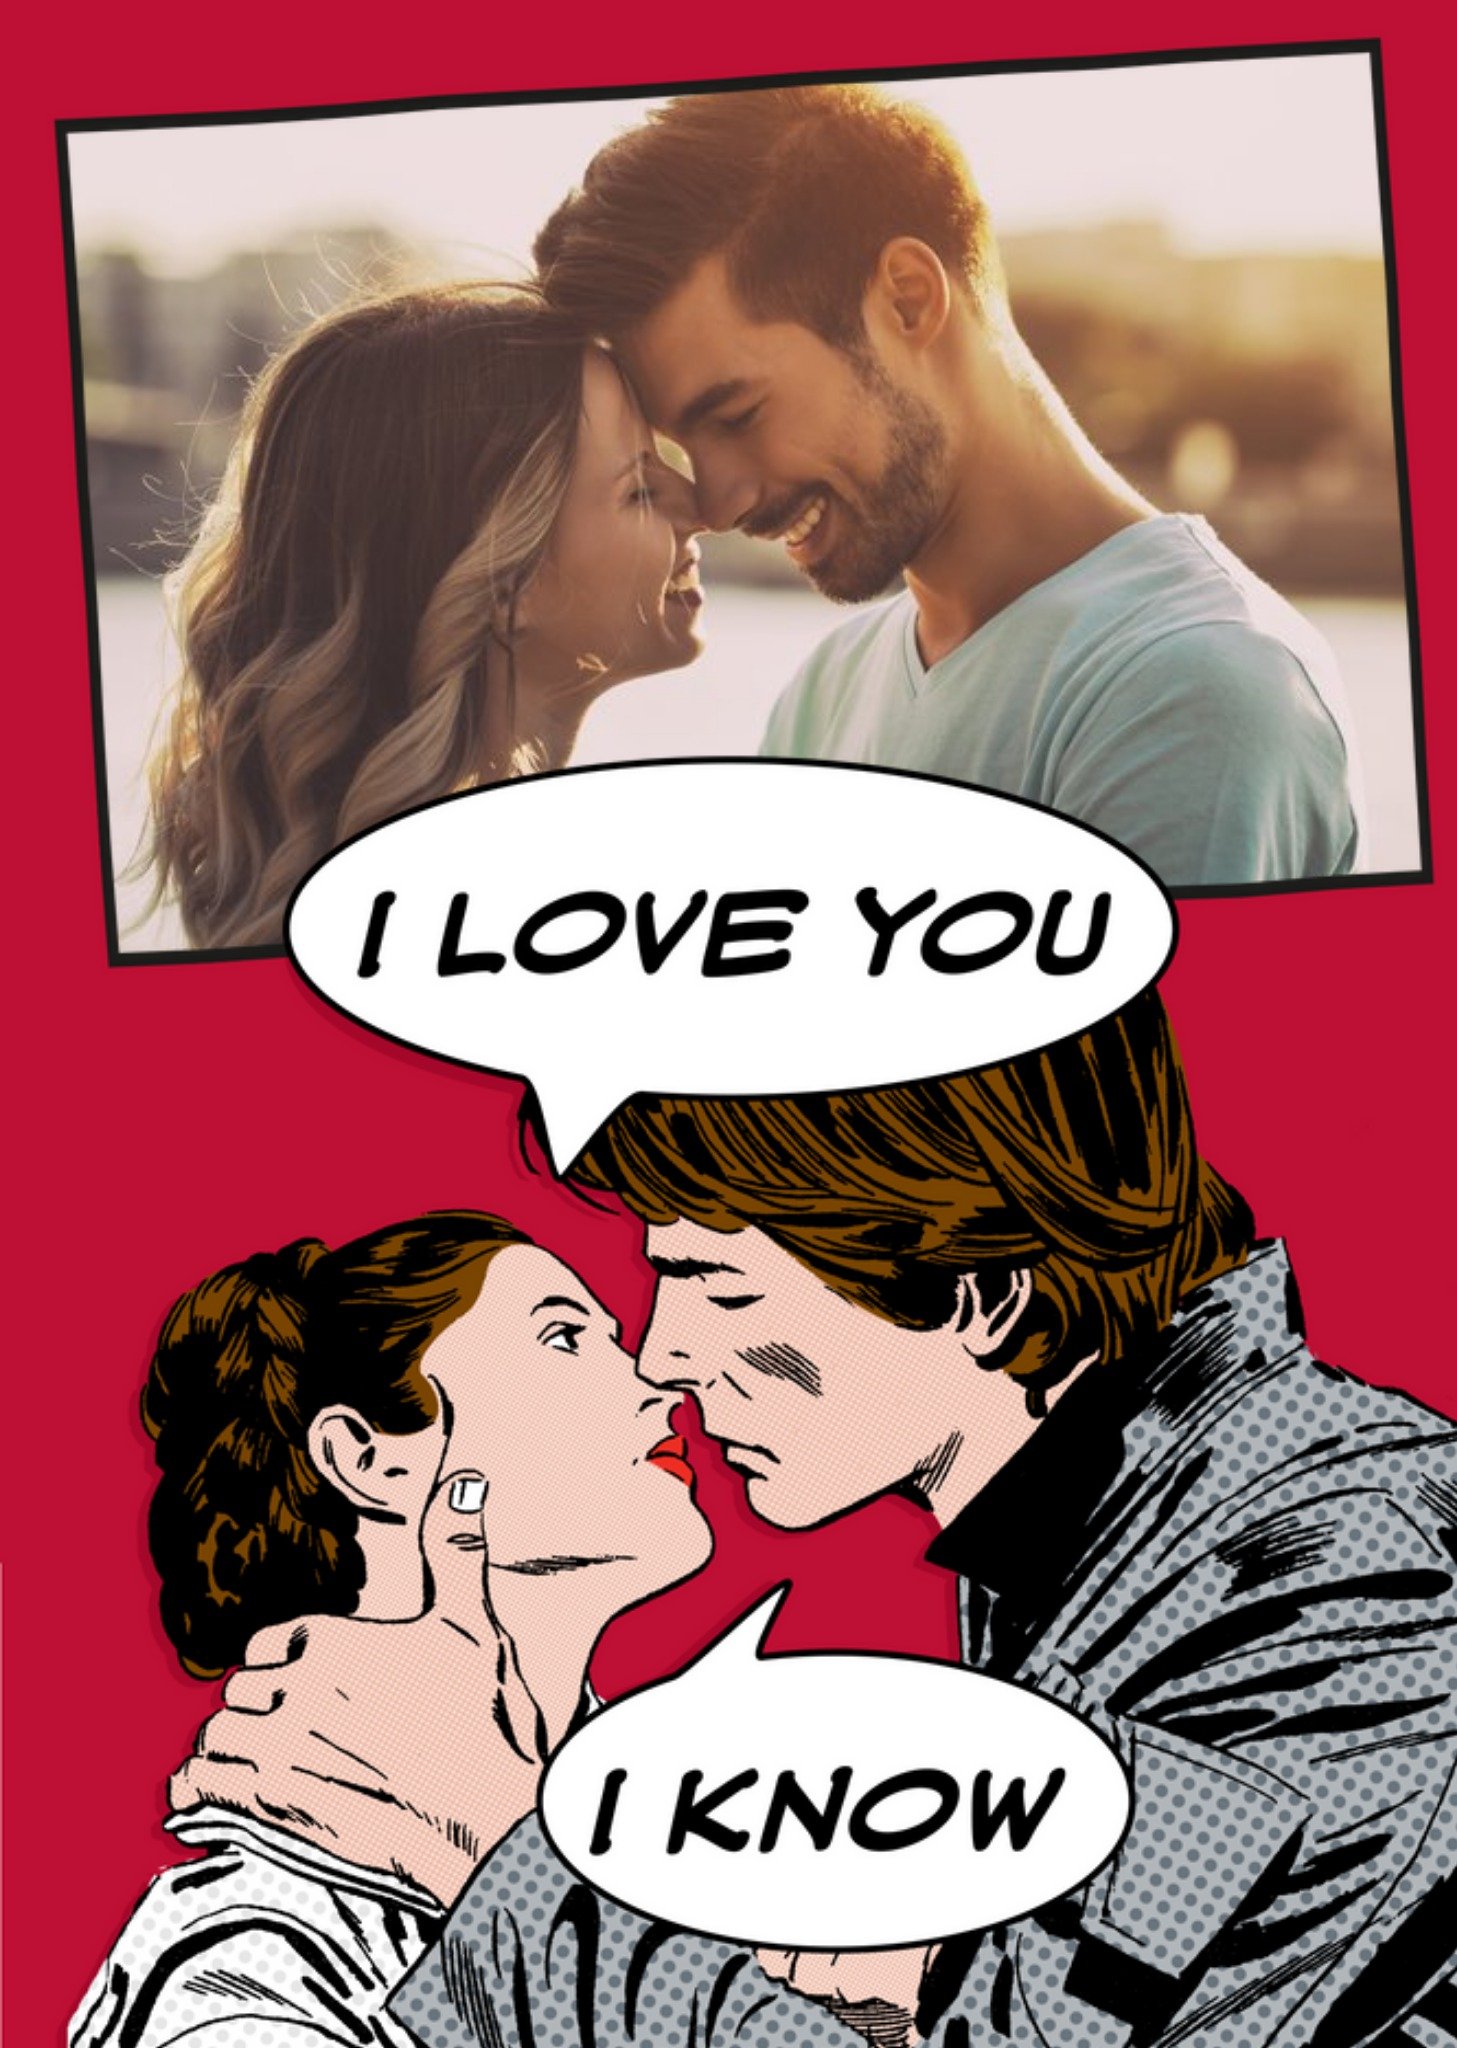 Disney Star Wars Princess Leia And Han Solo I Love You Valentine's Card Ecard